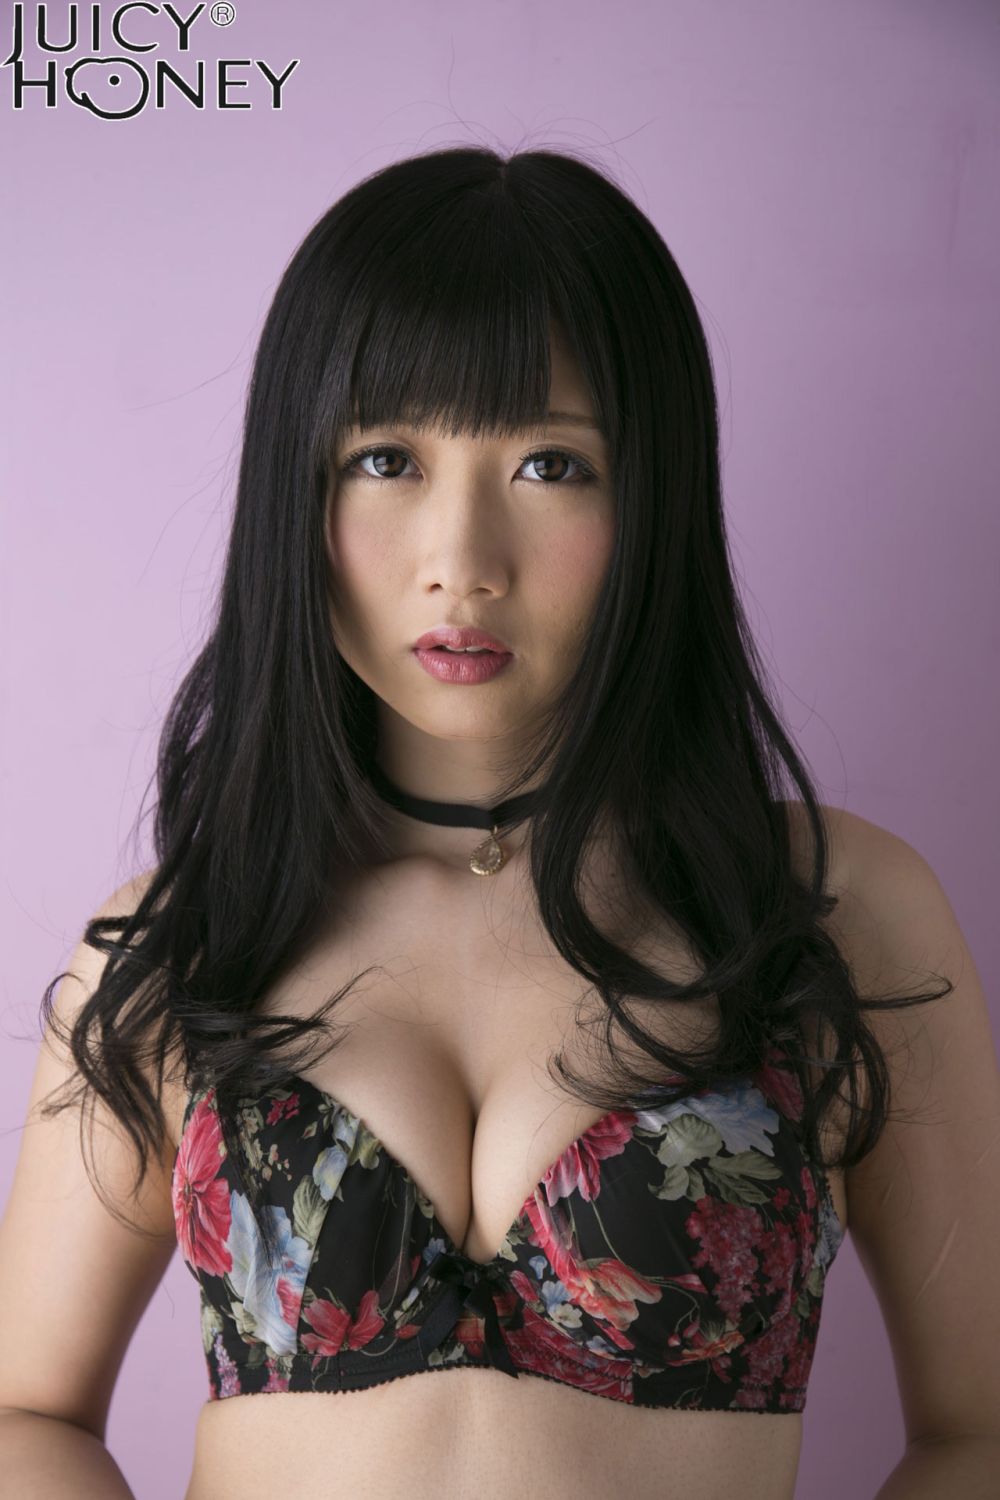 Hibiki Ohtsuki Sexy and Hottest Photos , Latest Pics